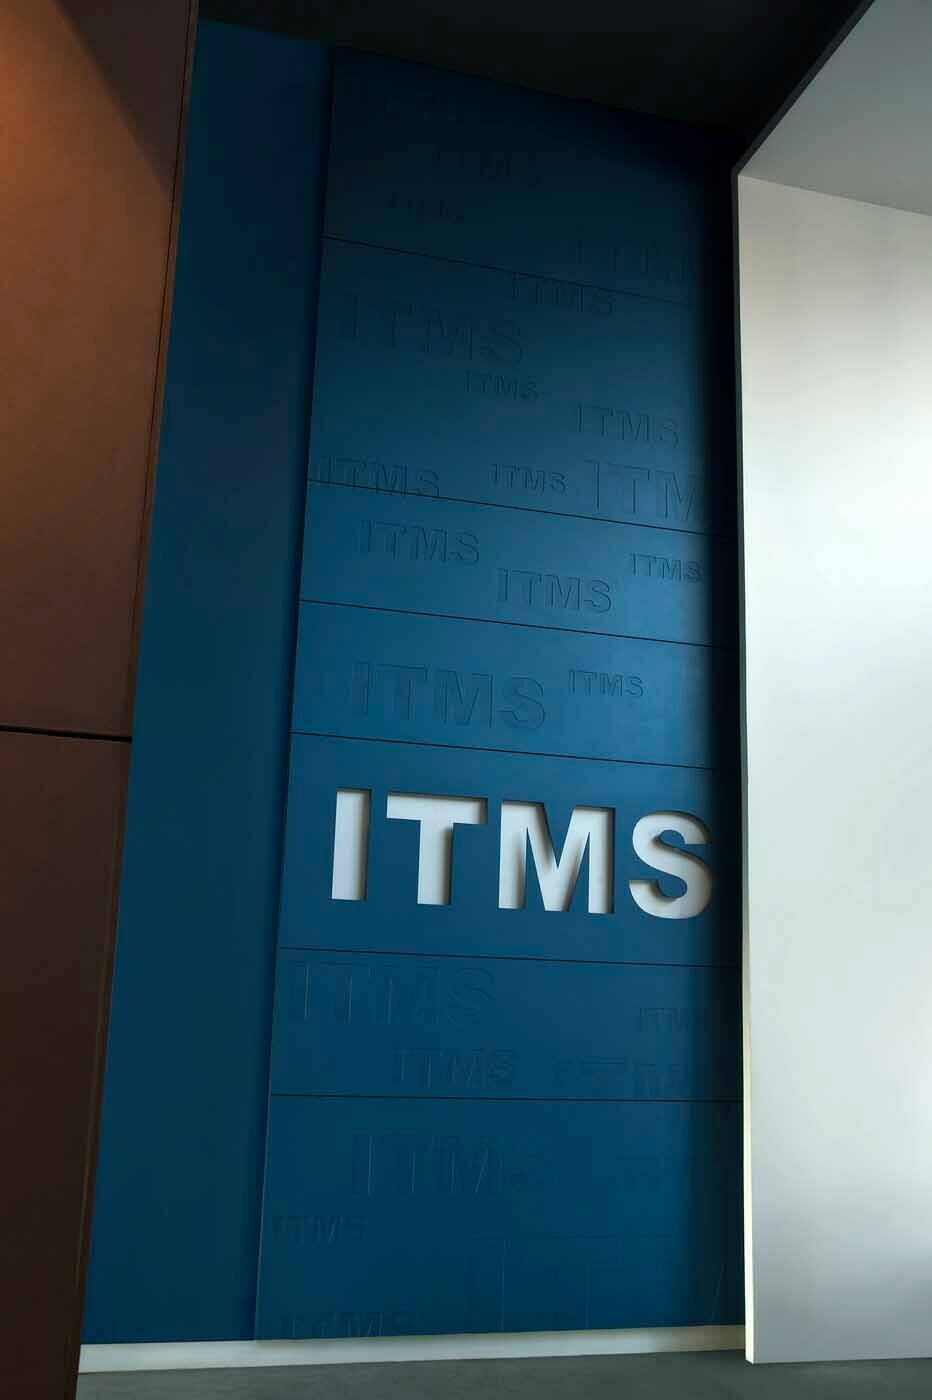 ITMS Telemedicina Do Brasil, Sao Paul, Brasilien